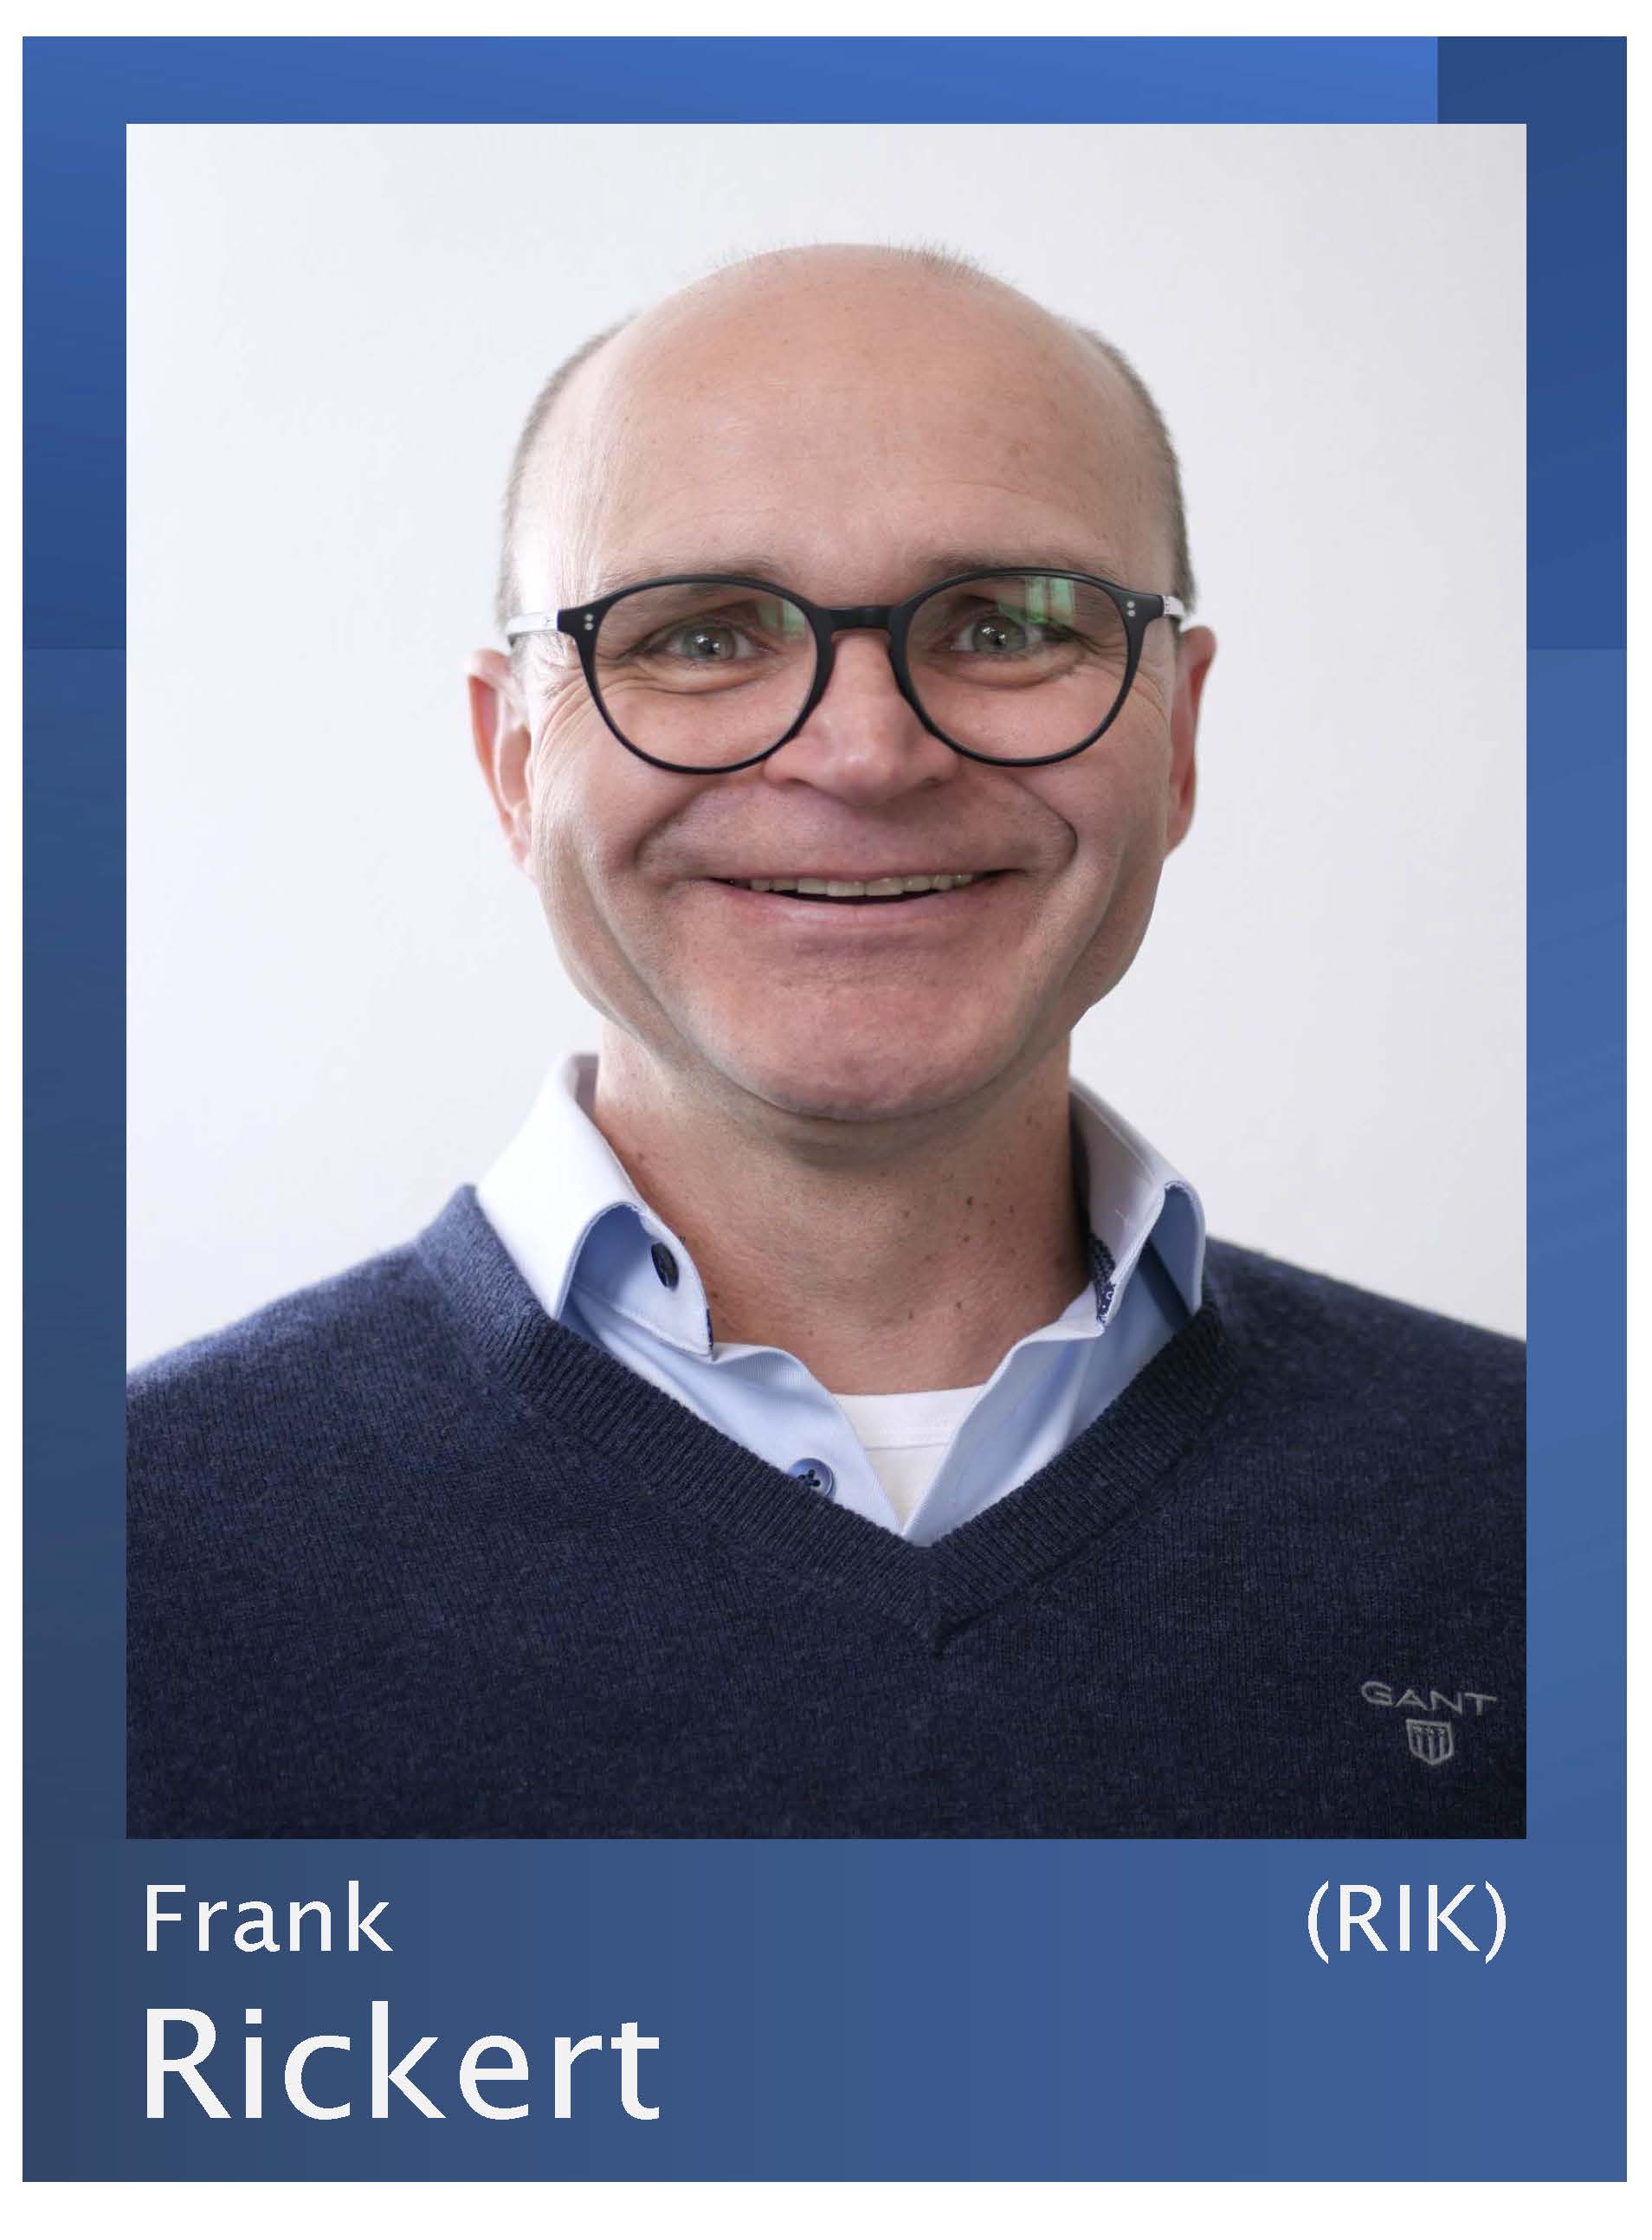 Frank Rickert